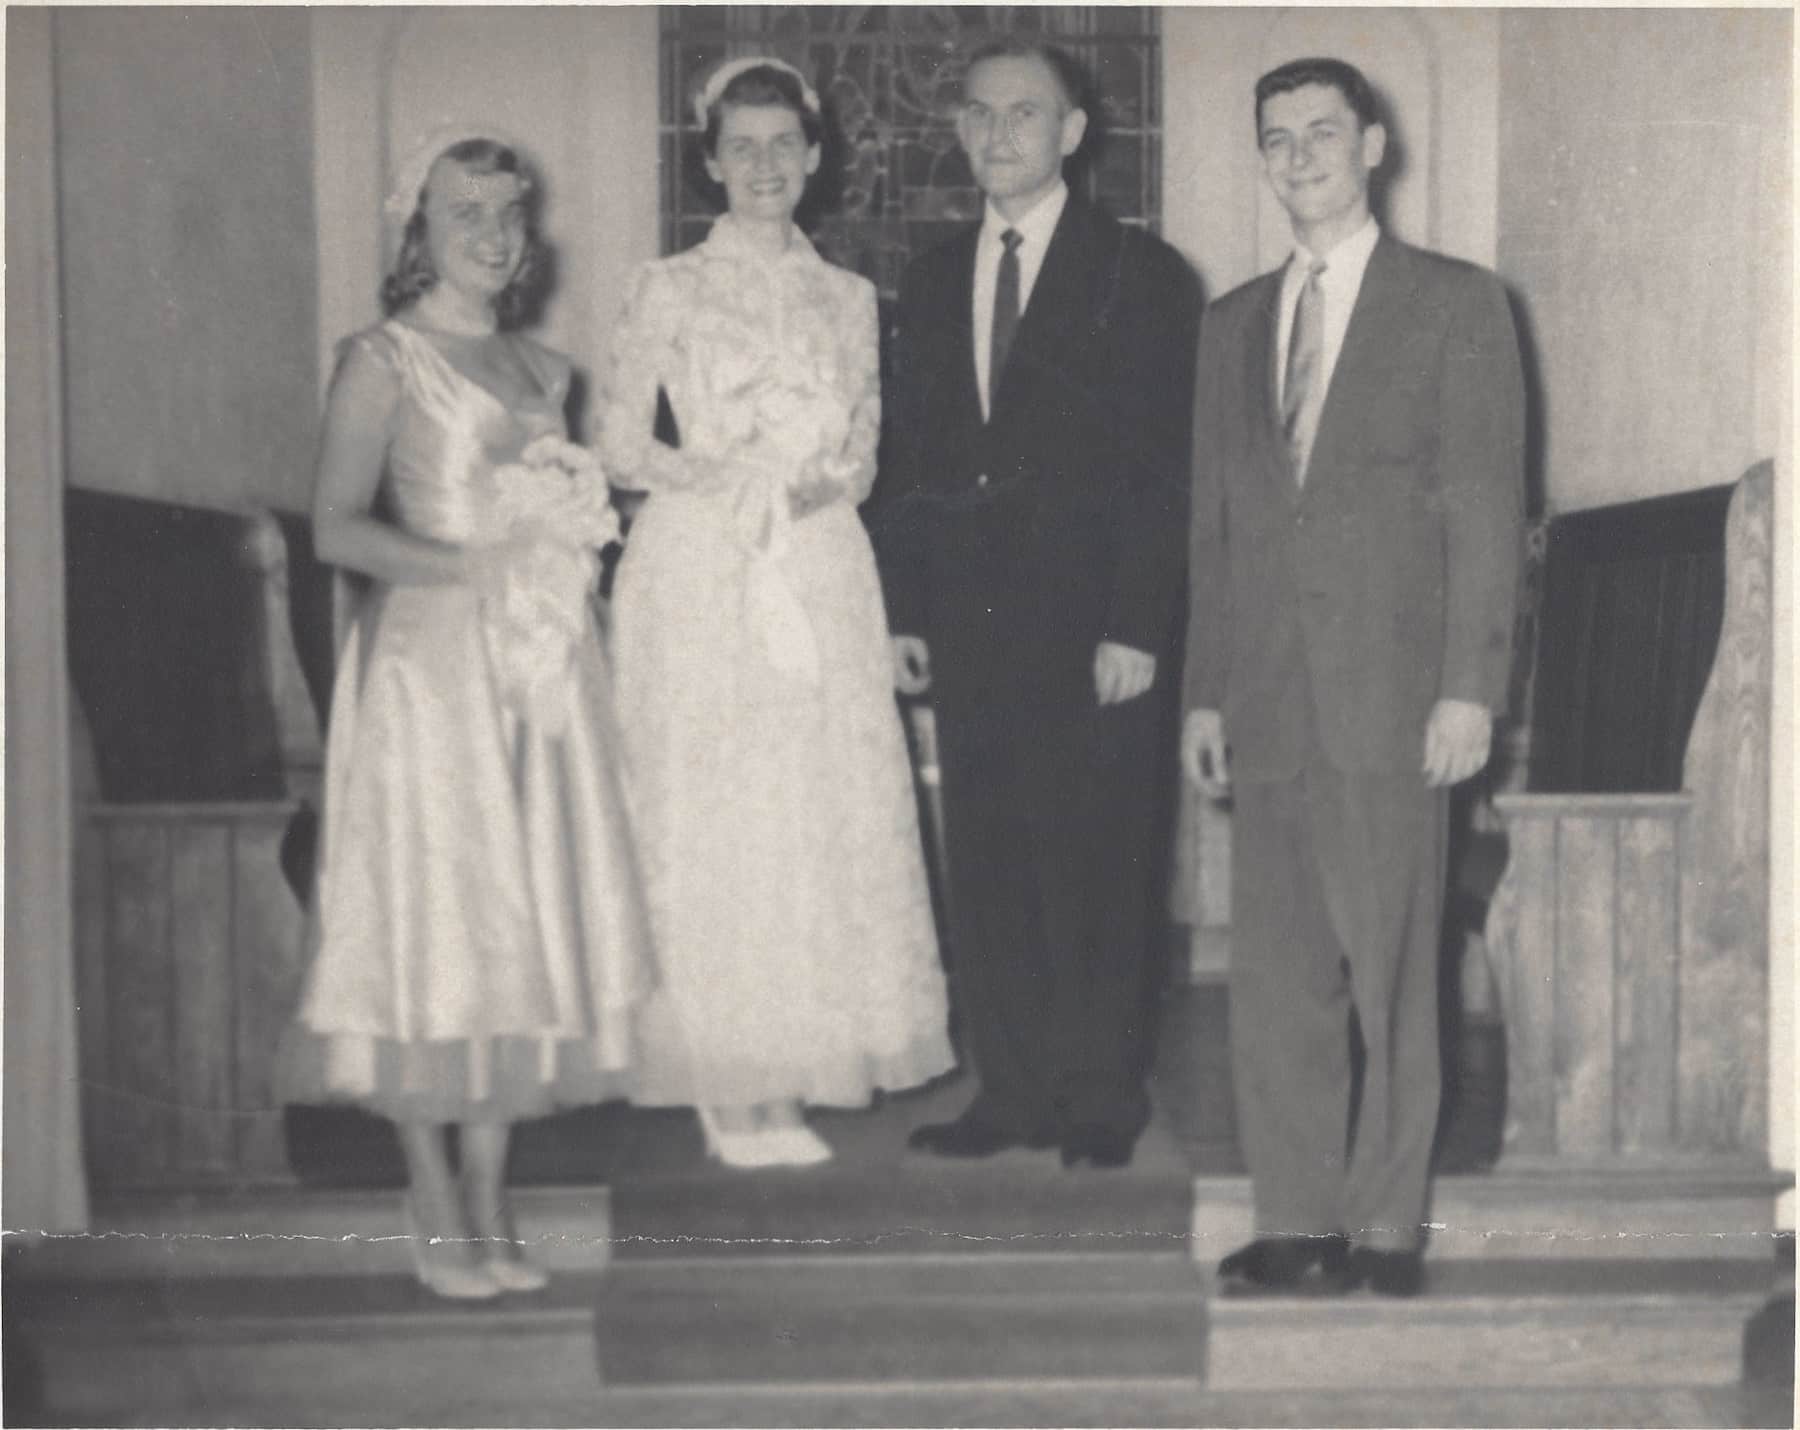 Hugh McMillan and Janet Grosser were married on June 6, 1952, in Alexandria, Va.